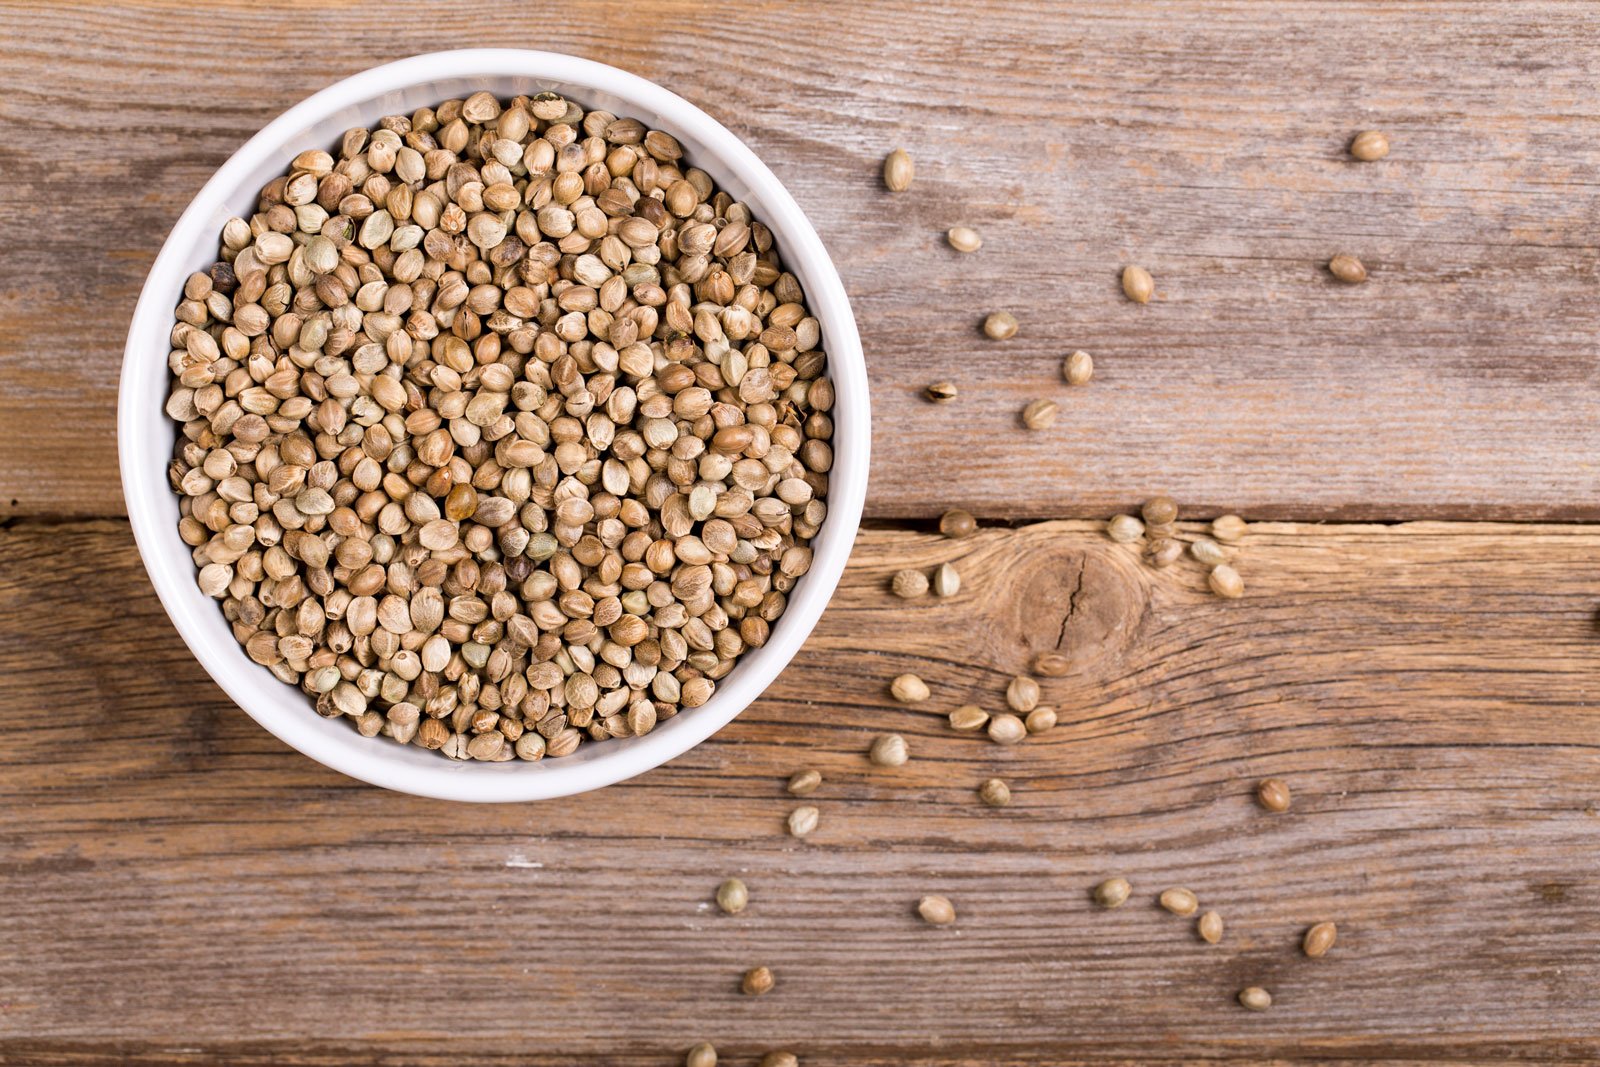 Foods we love: Hemp seeds